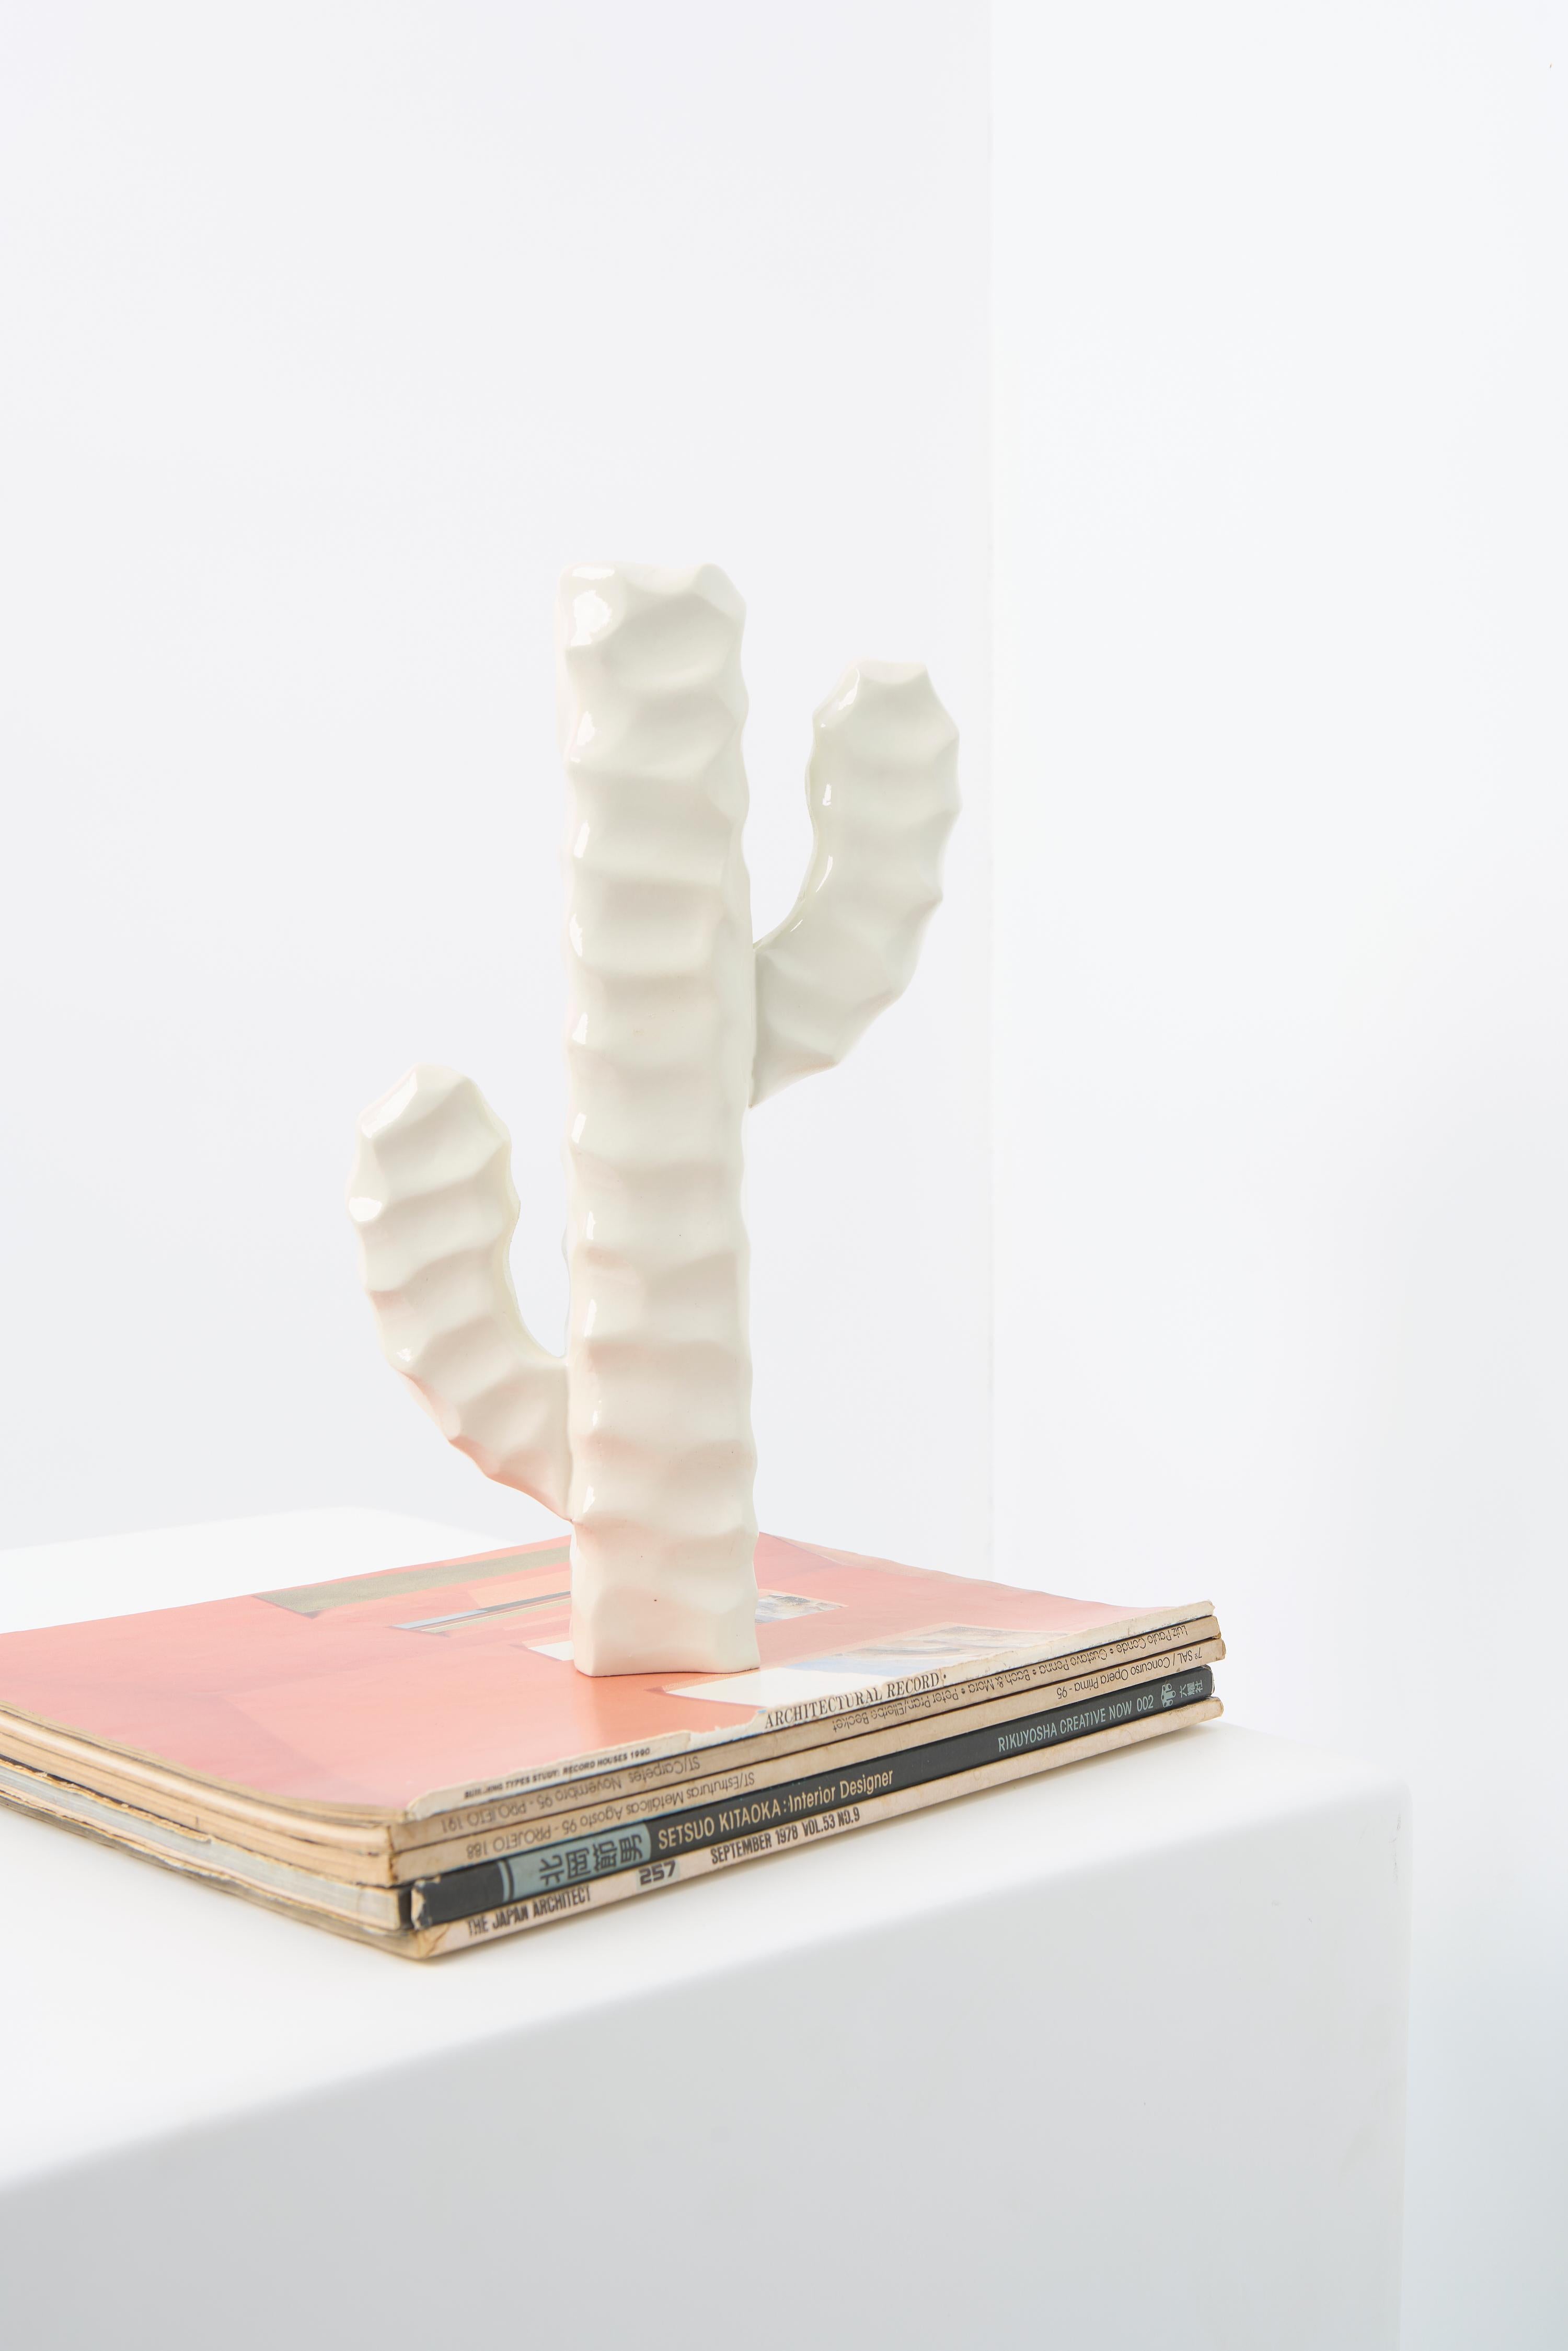 Minimalist Mandacaru Series, Wooden Cactus Table Sculpture For Sale